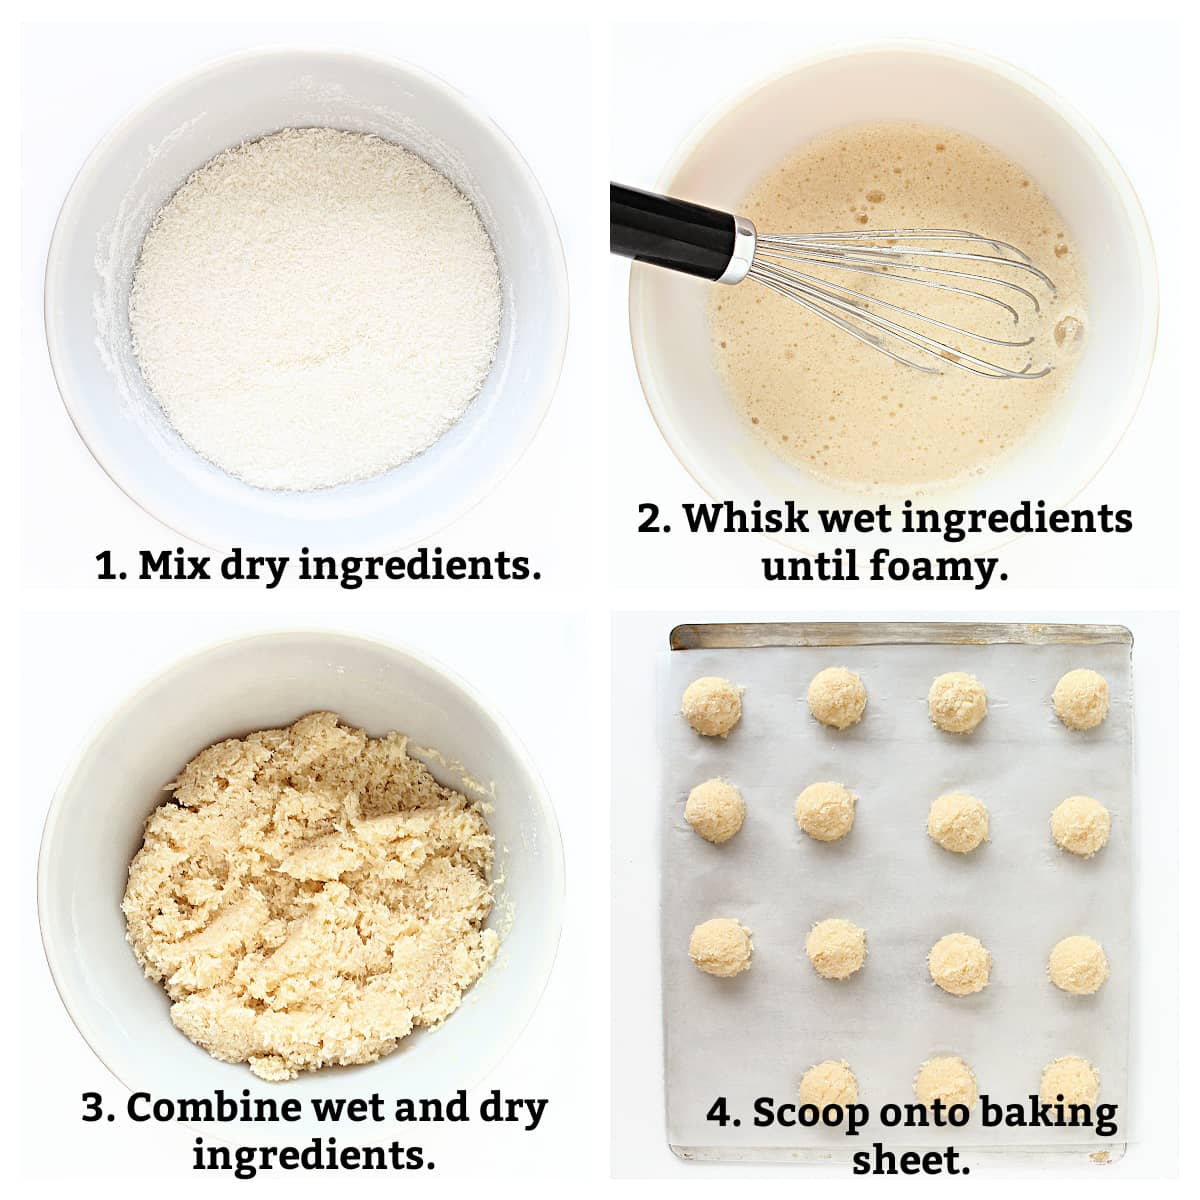 Instructions: mix dry ingredients, mix wet ingredients, combine all ingredients, scoop onto baking sheet.